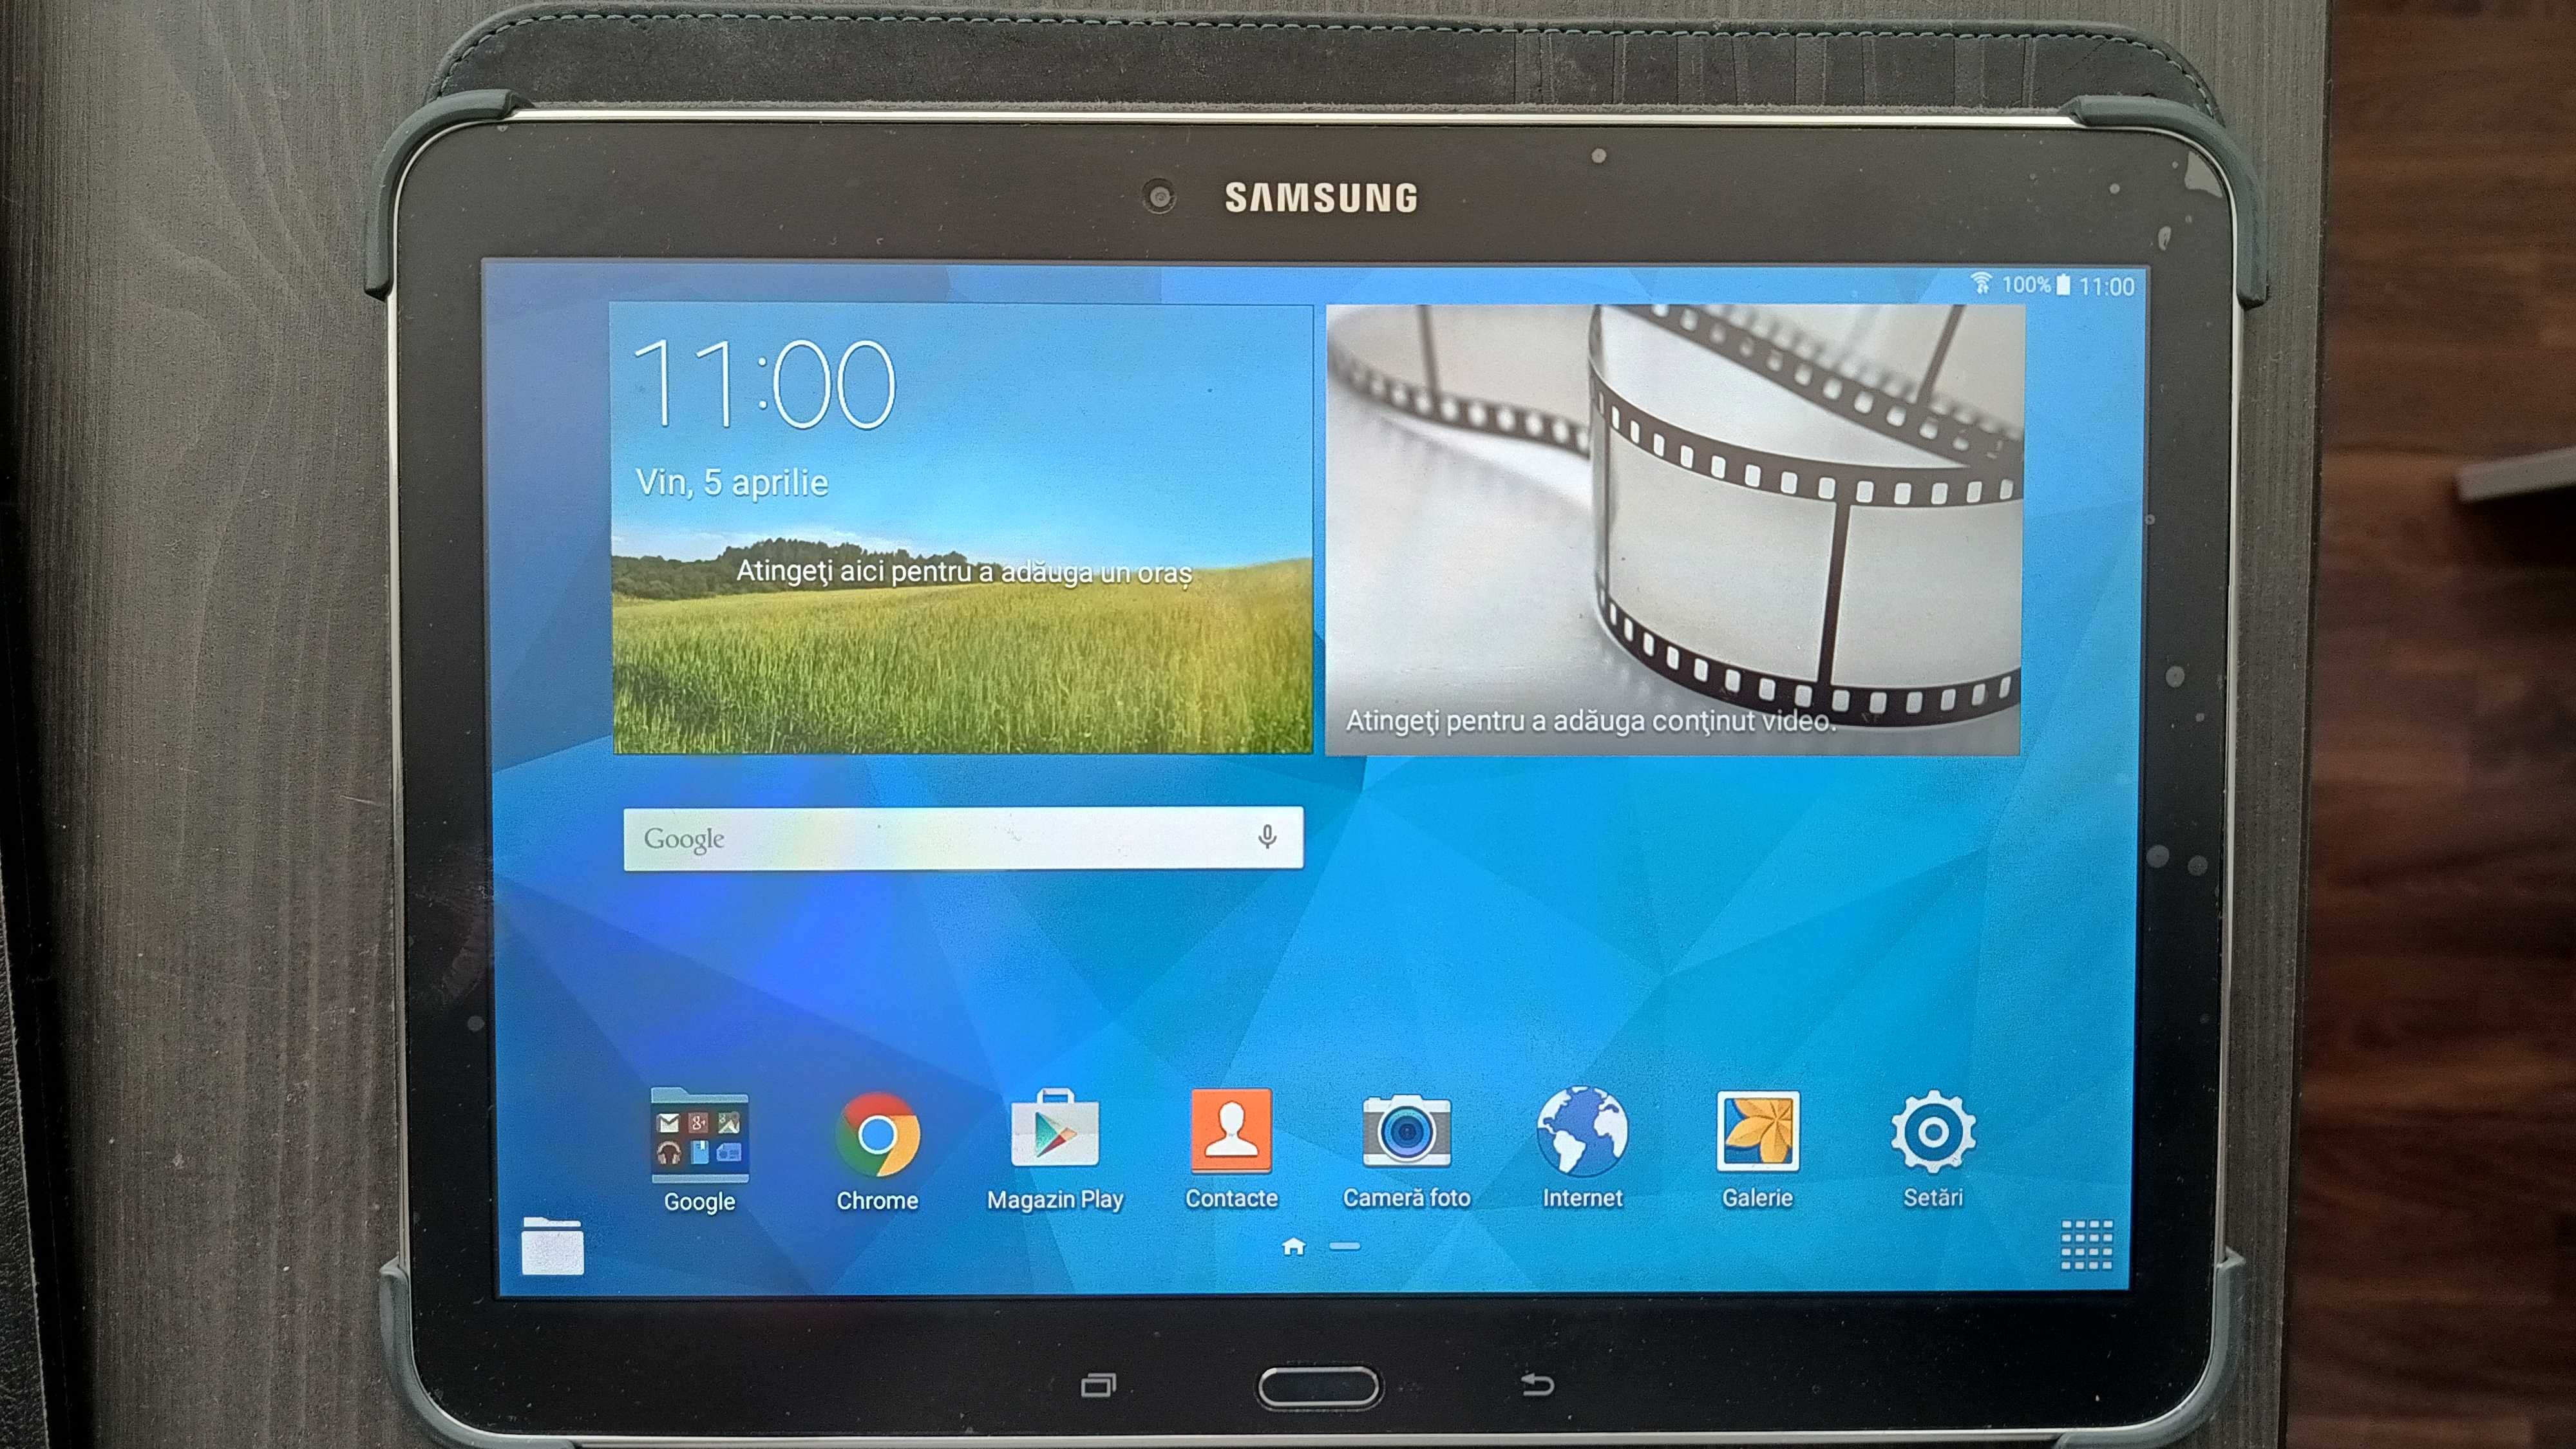 Samsung Galaxy Tab 4 SM-T533